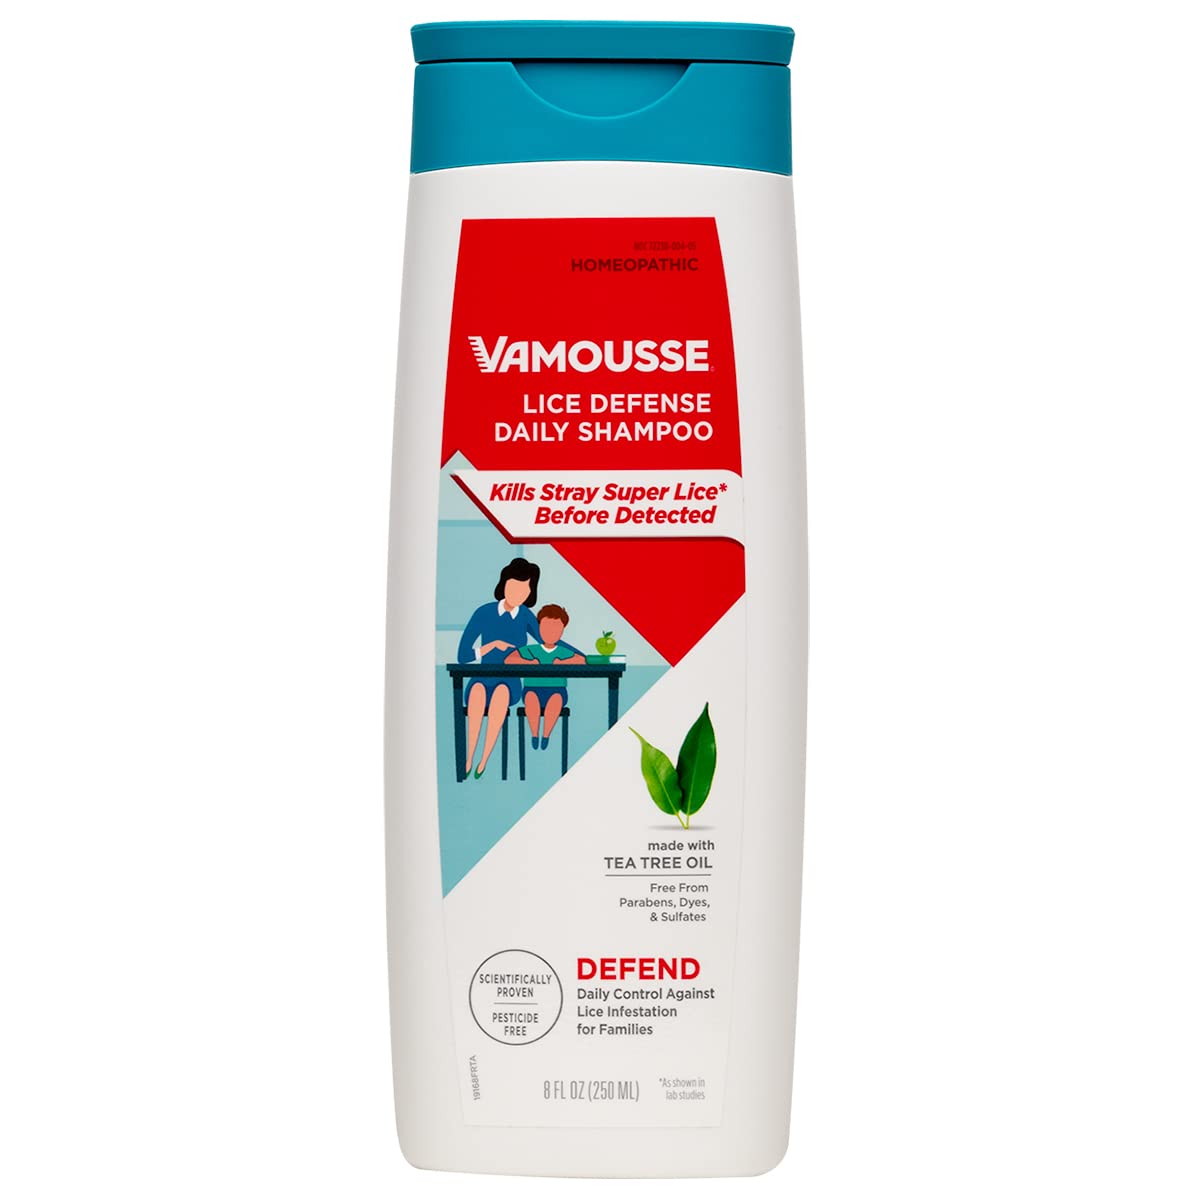 Vamousse Lice Defense Daily Shampoo, Kills Super Lice, [...]